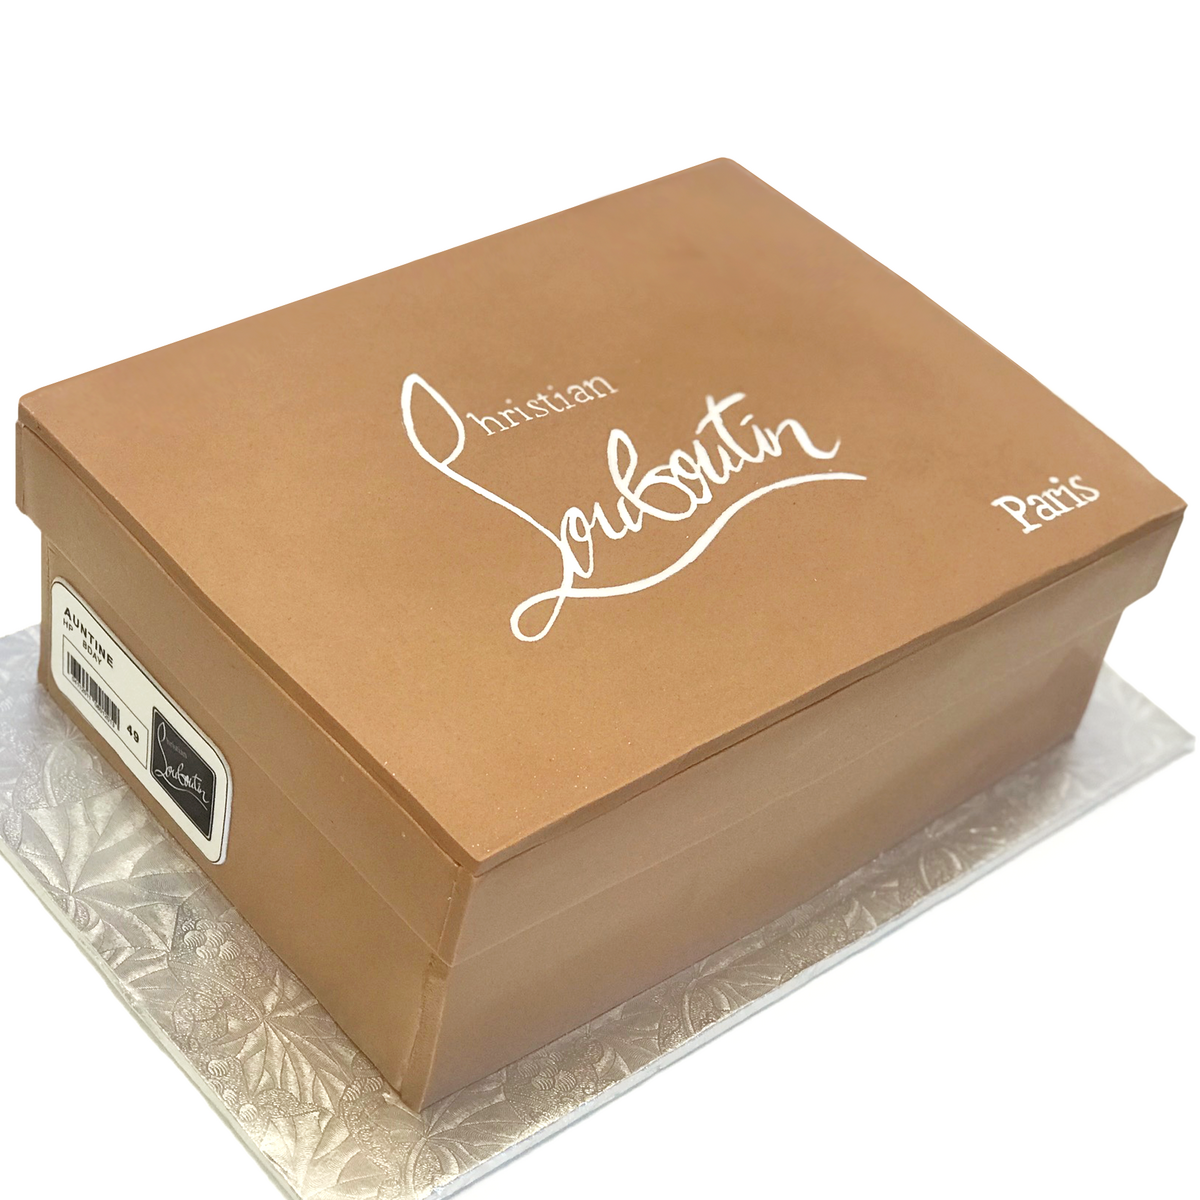 Whippt Kitchen - Louboutin shoe box cake1